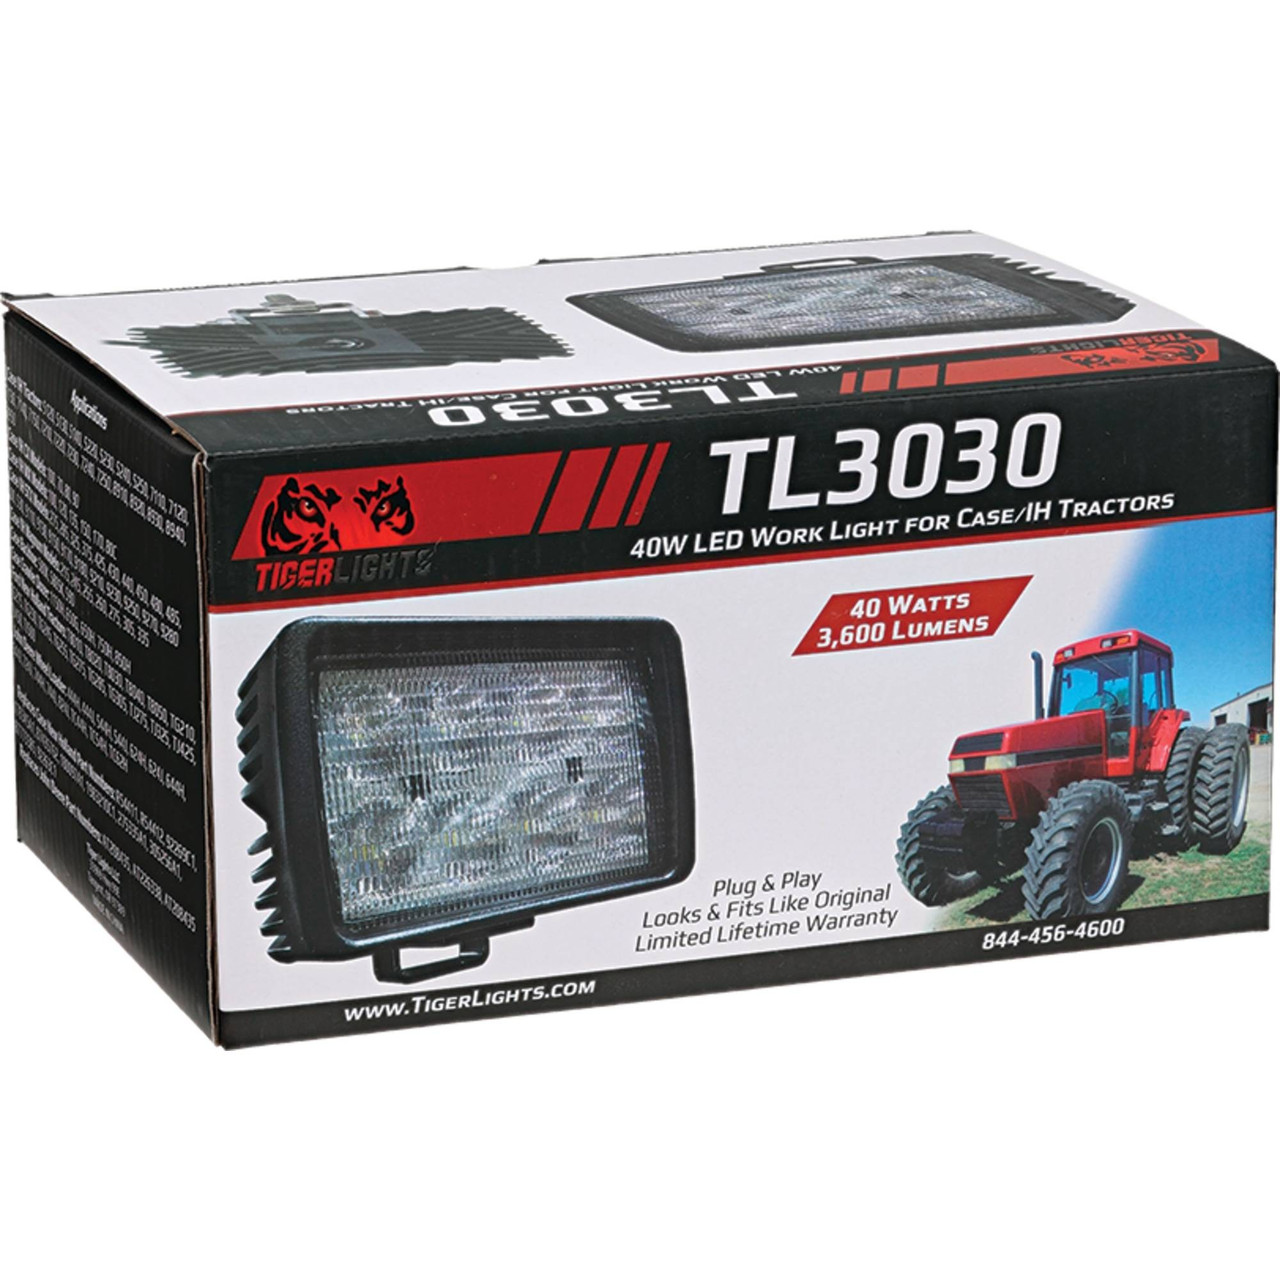 LED Tractor LED Lights from Tiger 92269C1 Lights Agricultural Light